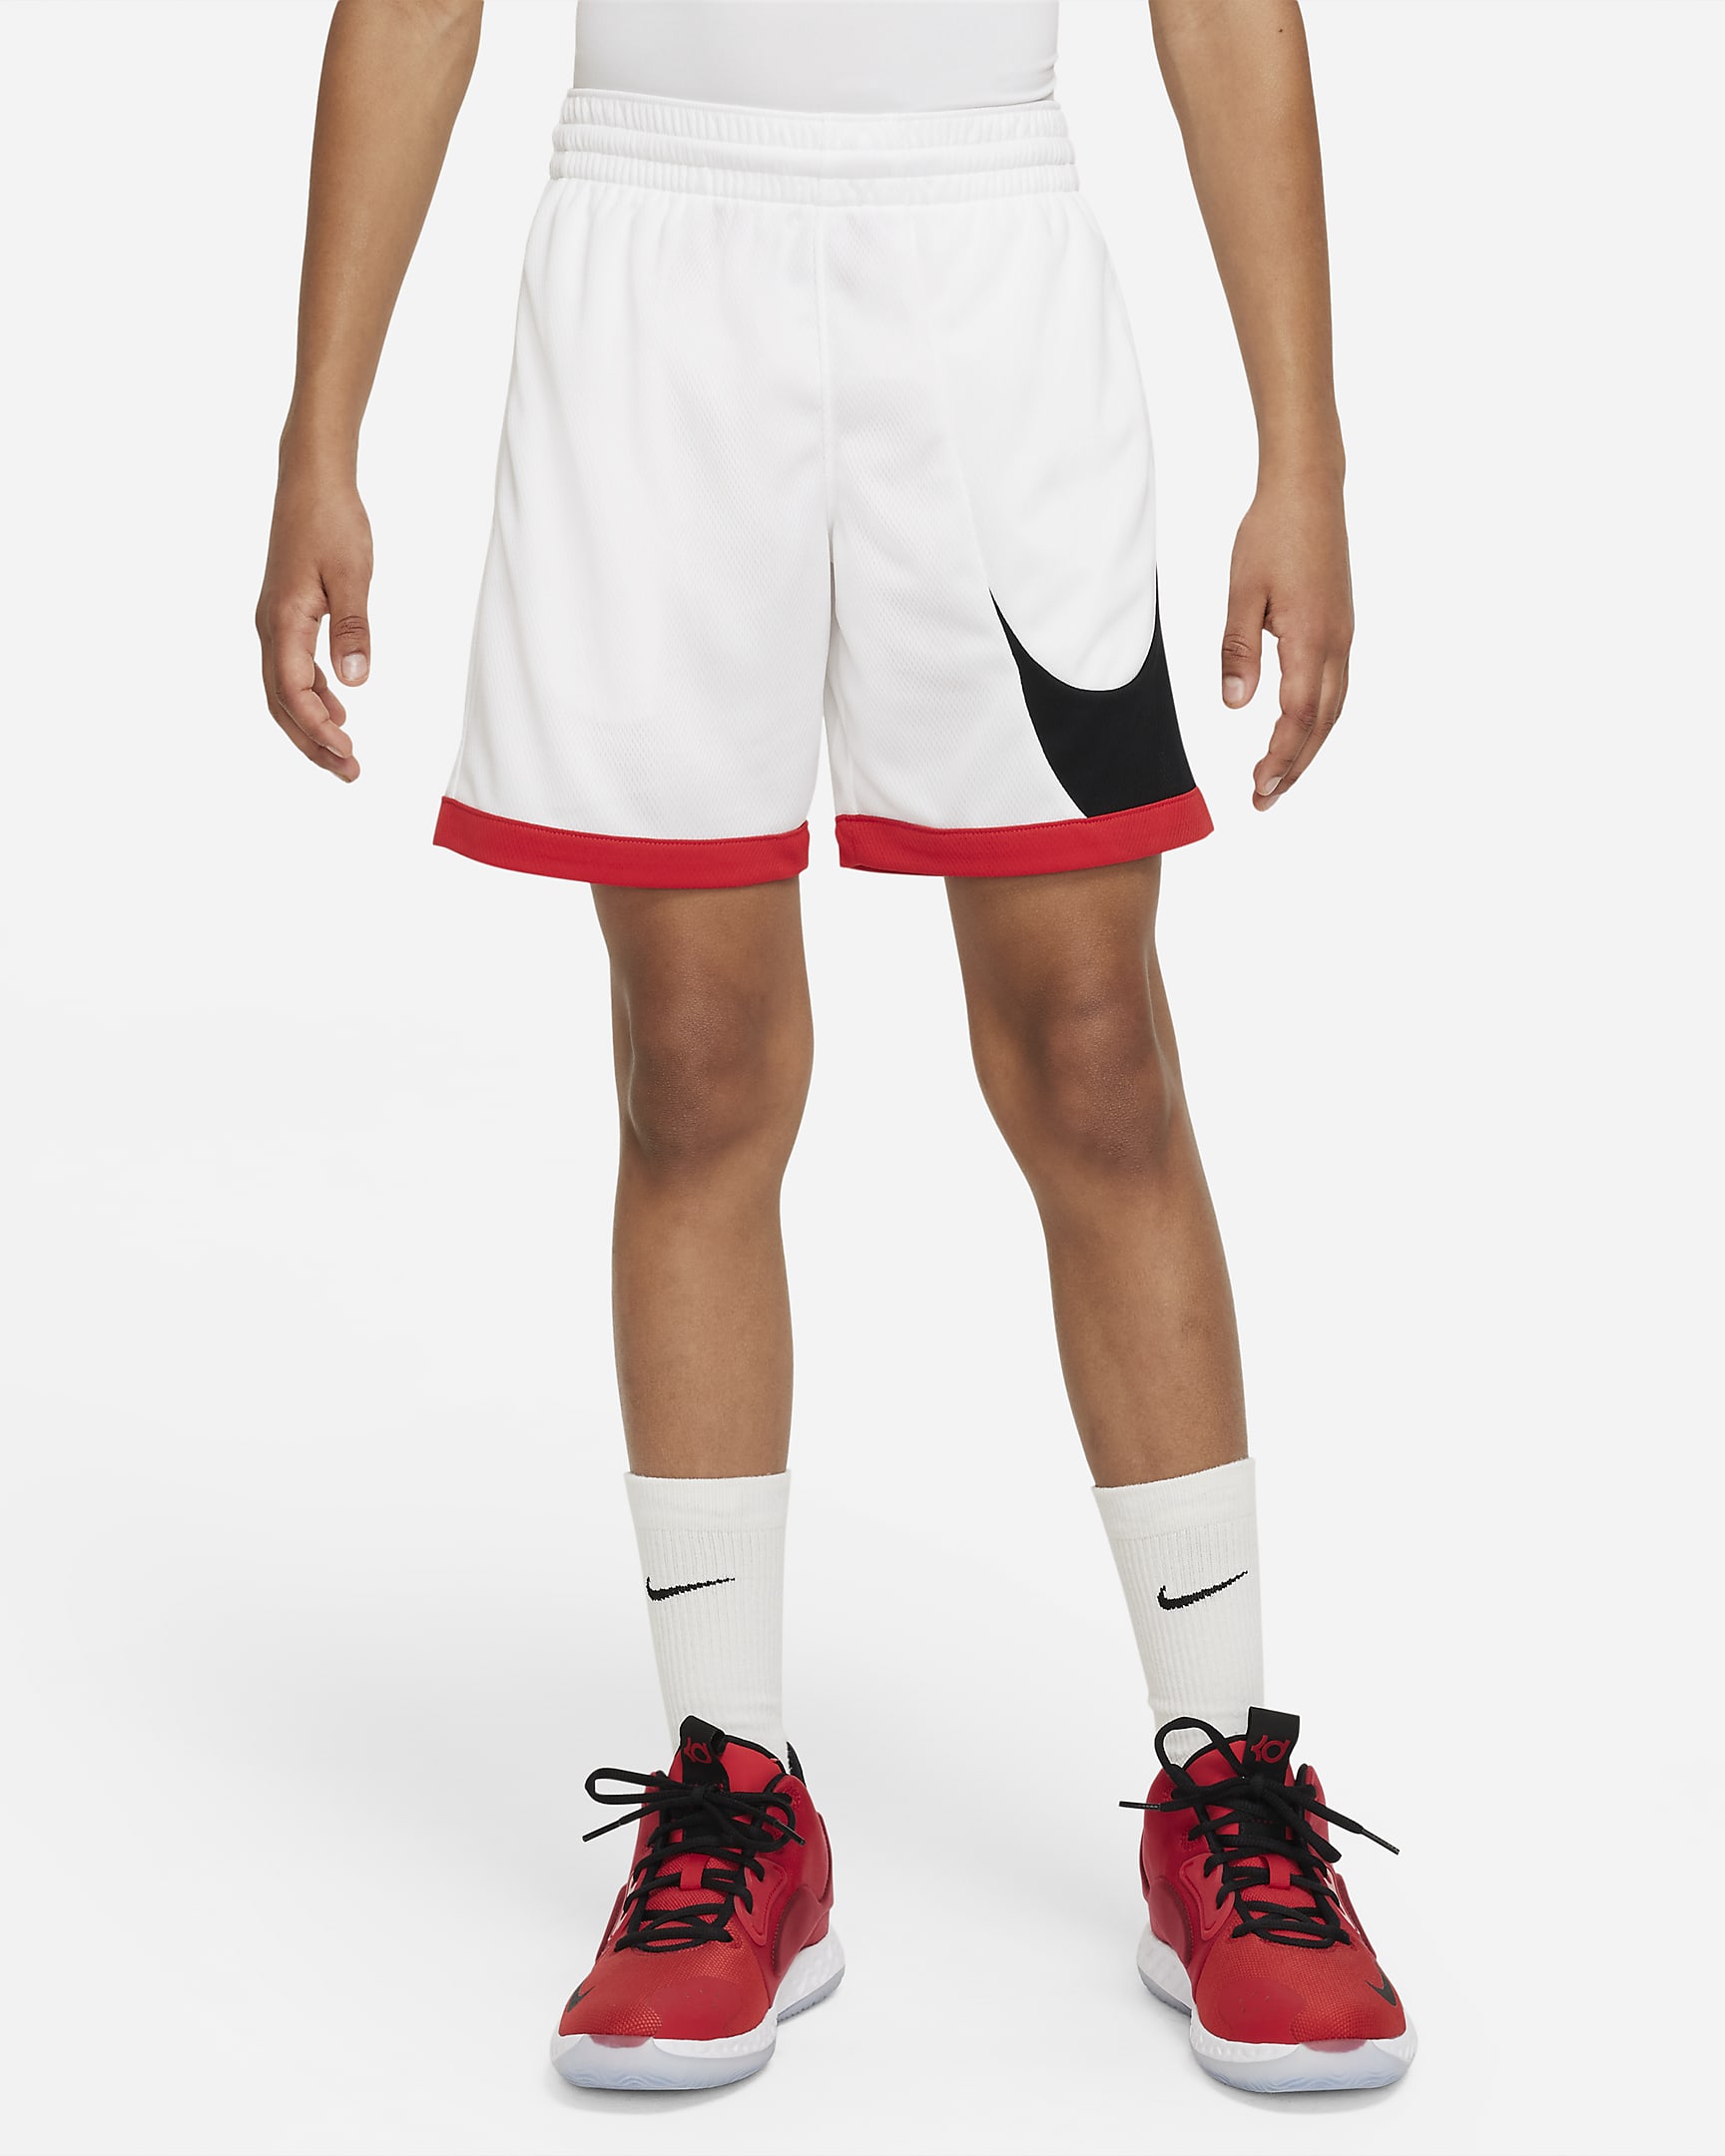 Nike Dri-FIT Older Kids' (Boys') Basketball Shorts. Nike IL